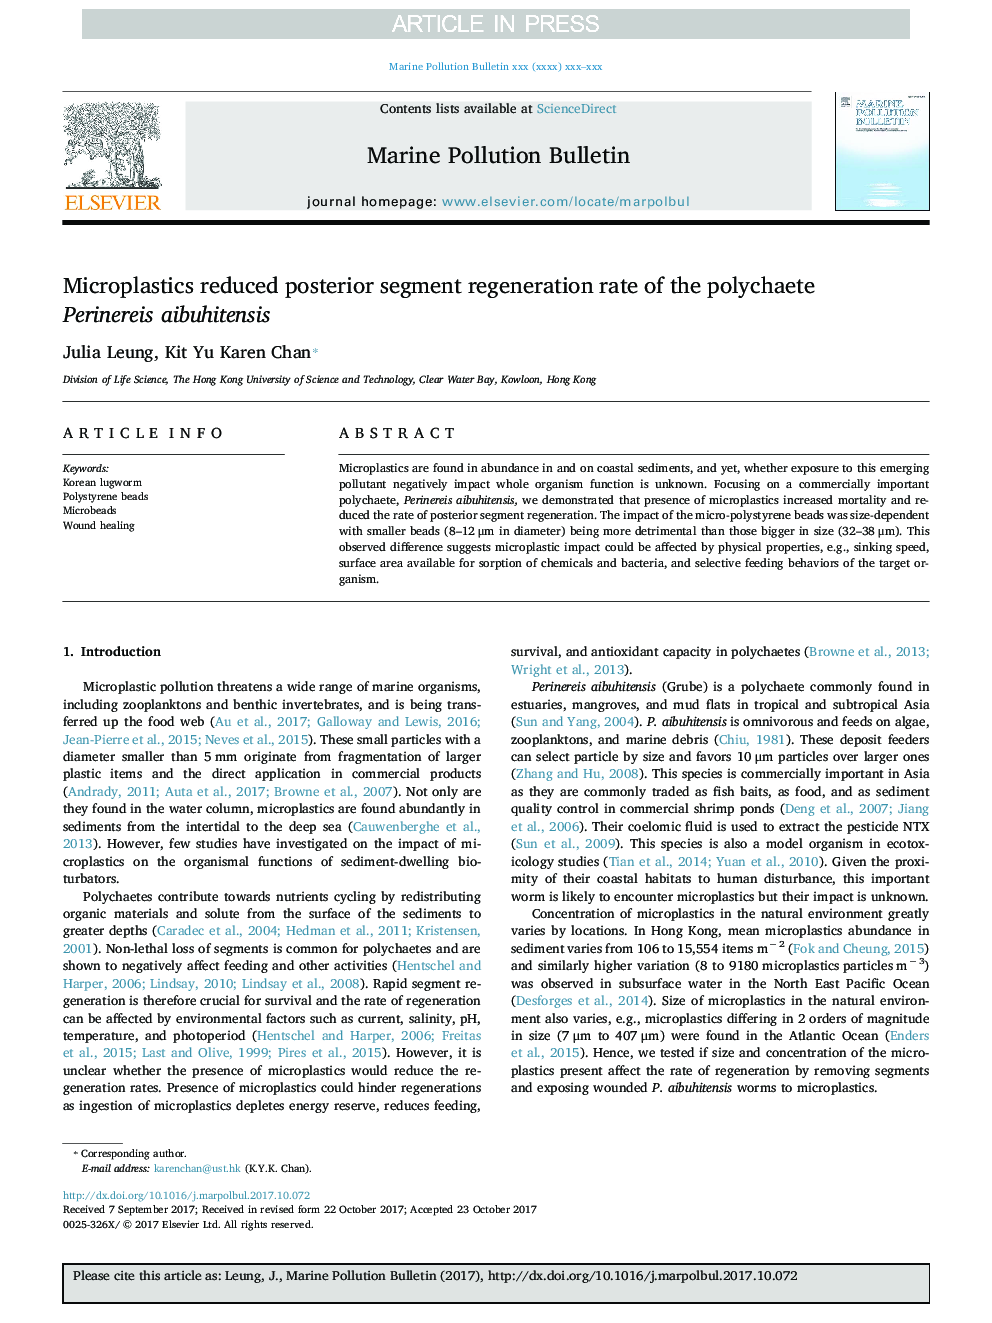 Microplastics reduced posterior segment regeneration rate of the polychaete Perinereis aibuhitensis